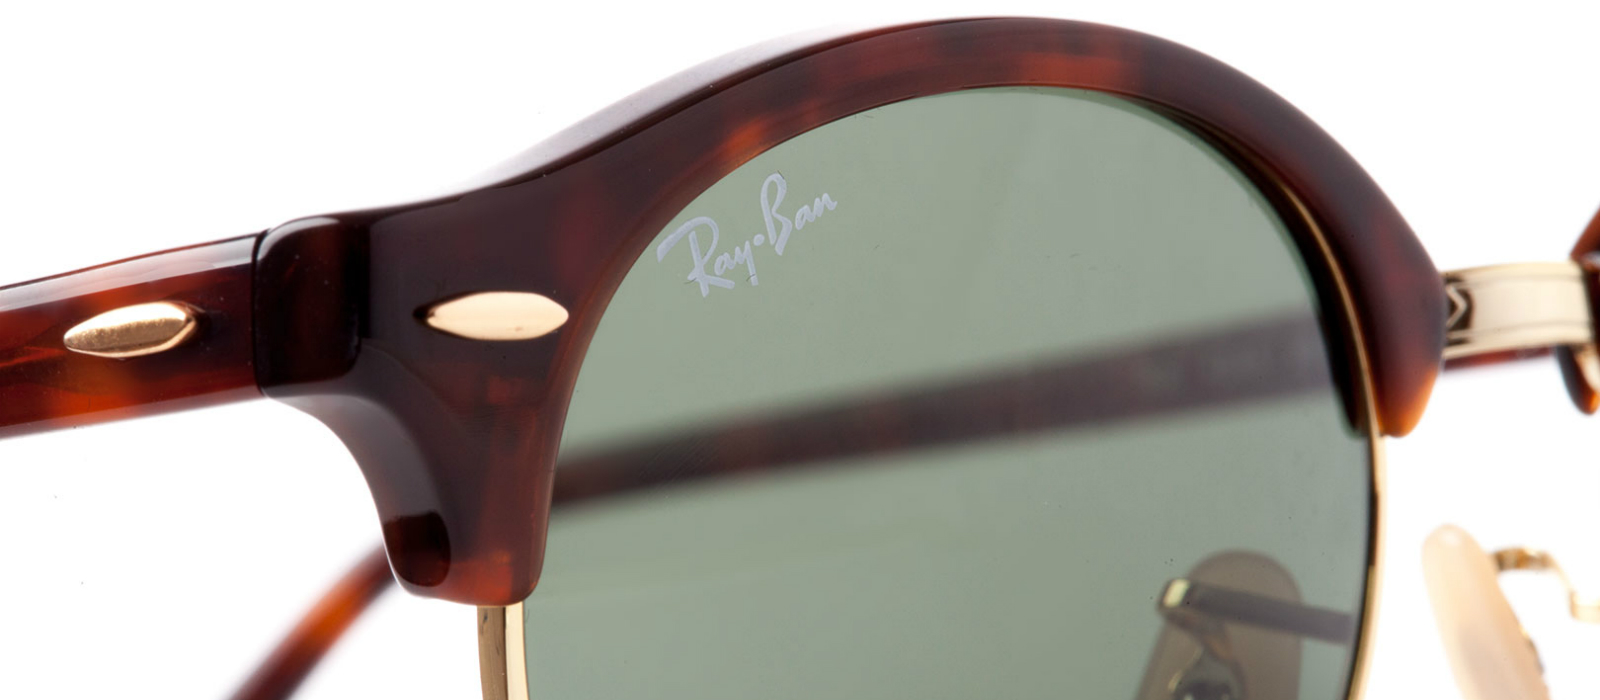 How to spot fake Ray-Ban sunglasses | Lentiamo